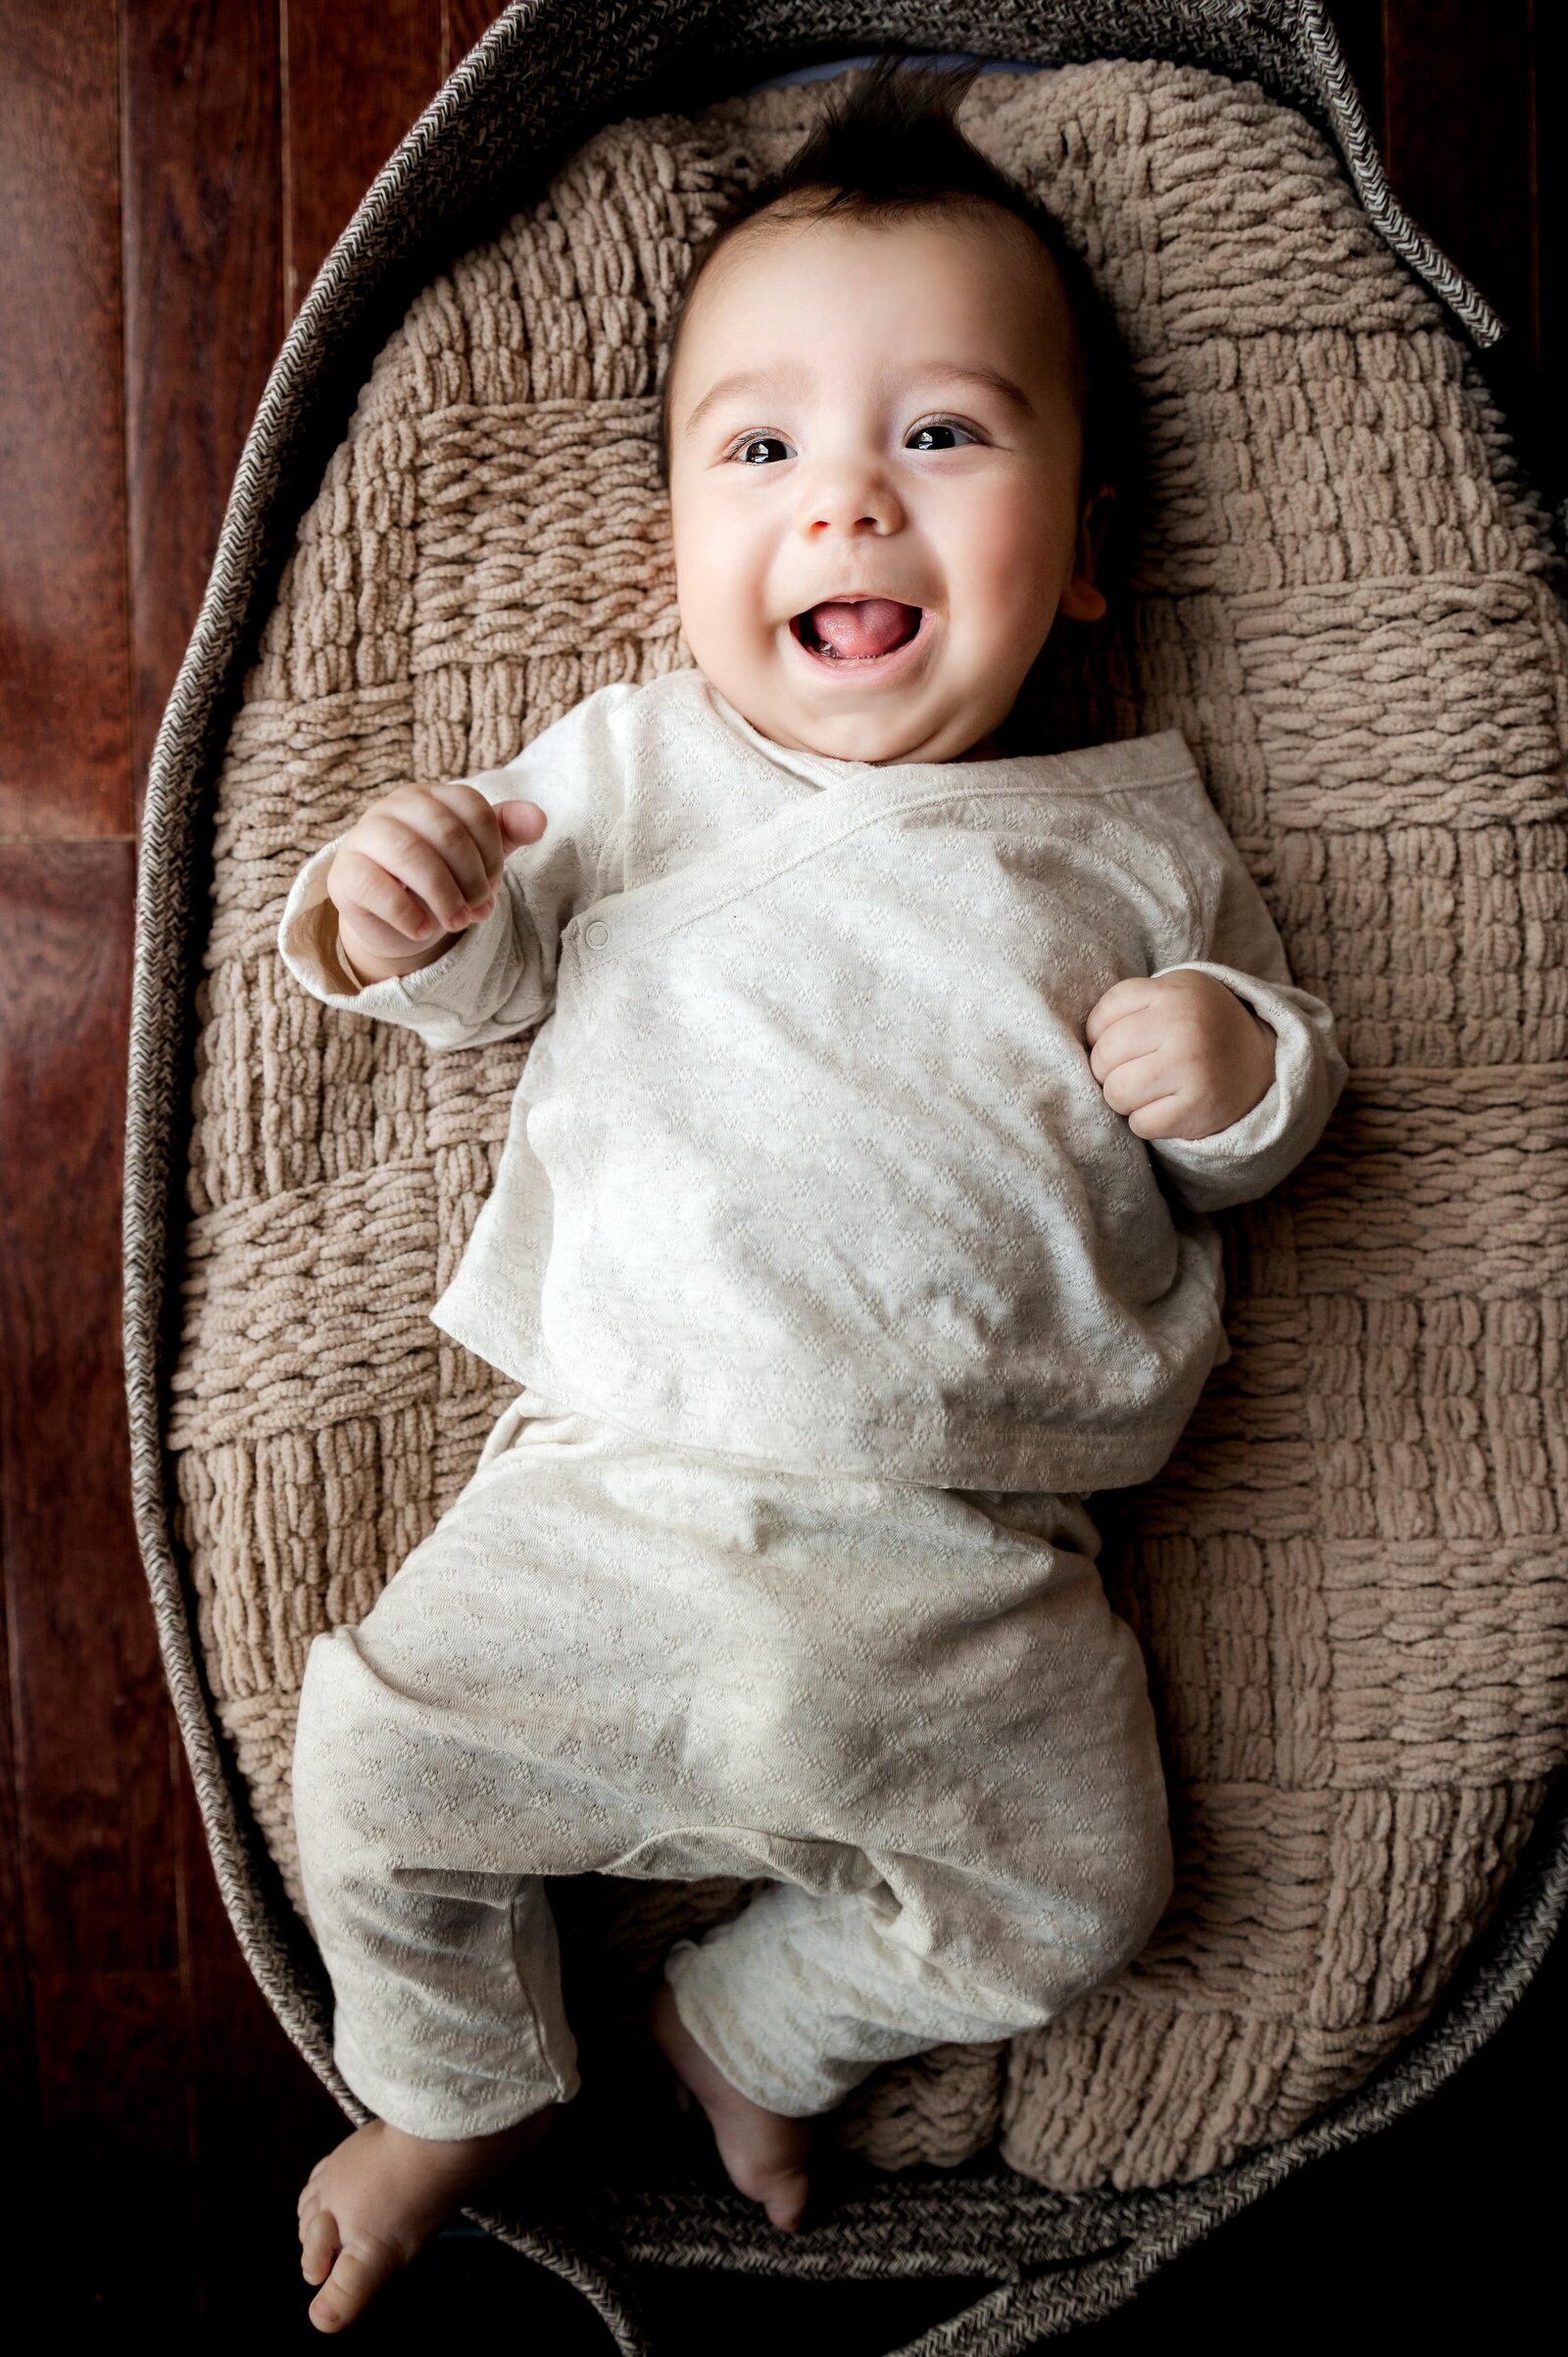 baby smiling in basket